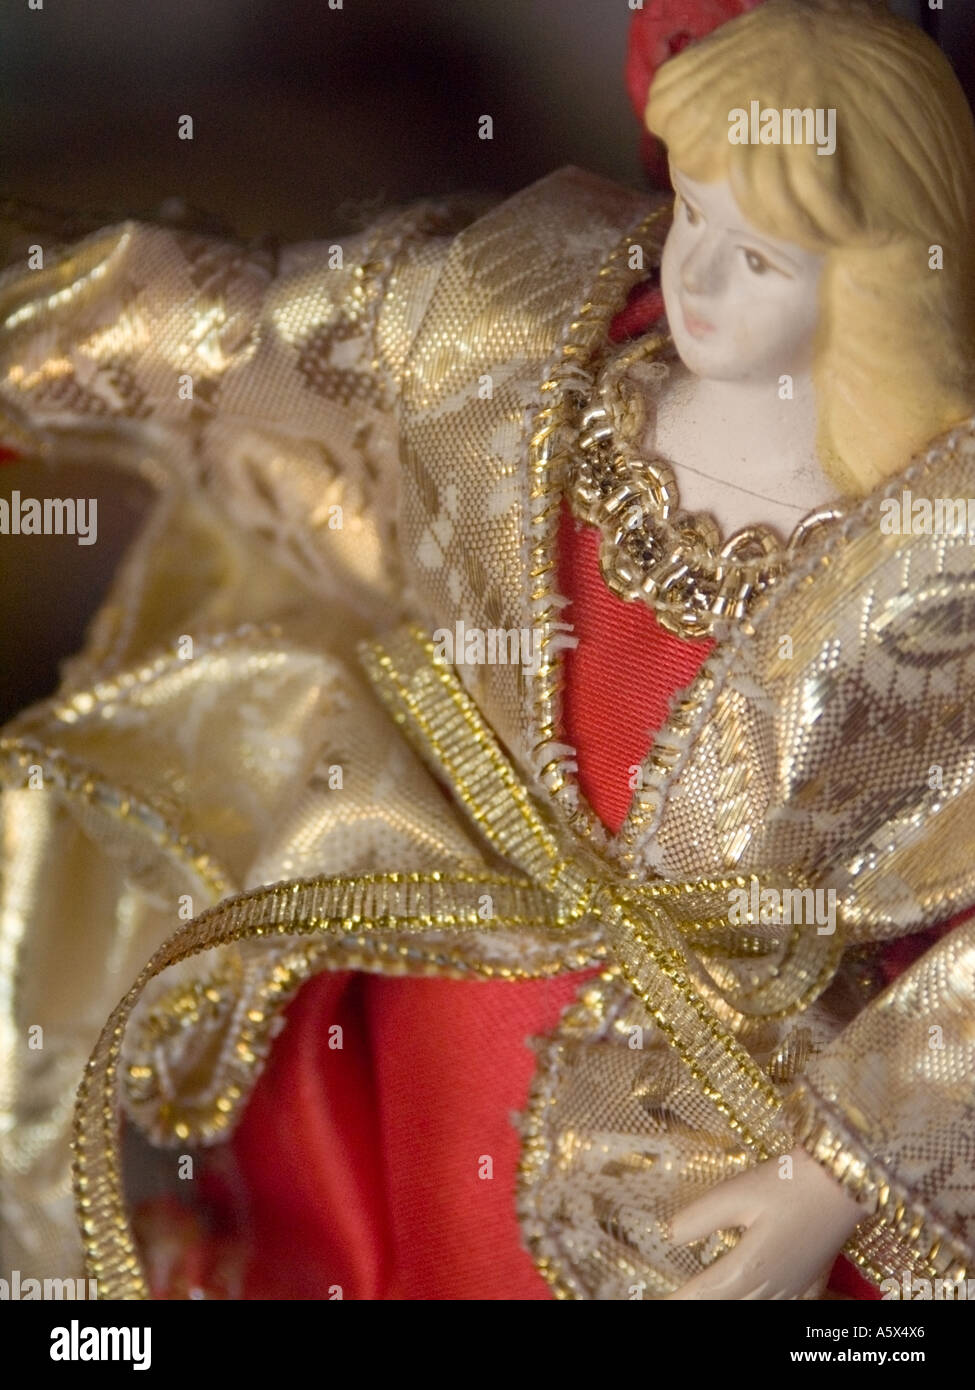 angel figure, pastore presepe. xmas decoration Stock Photo